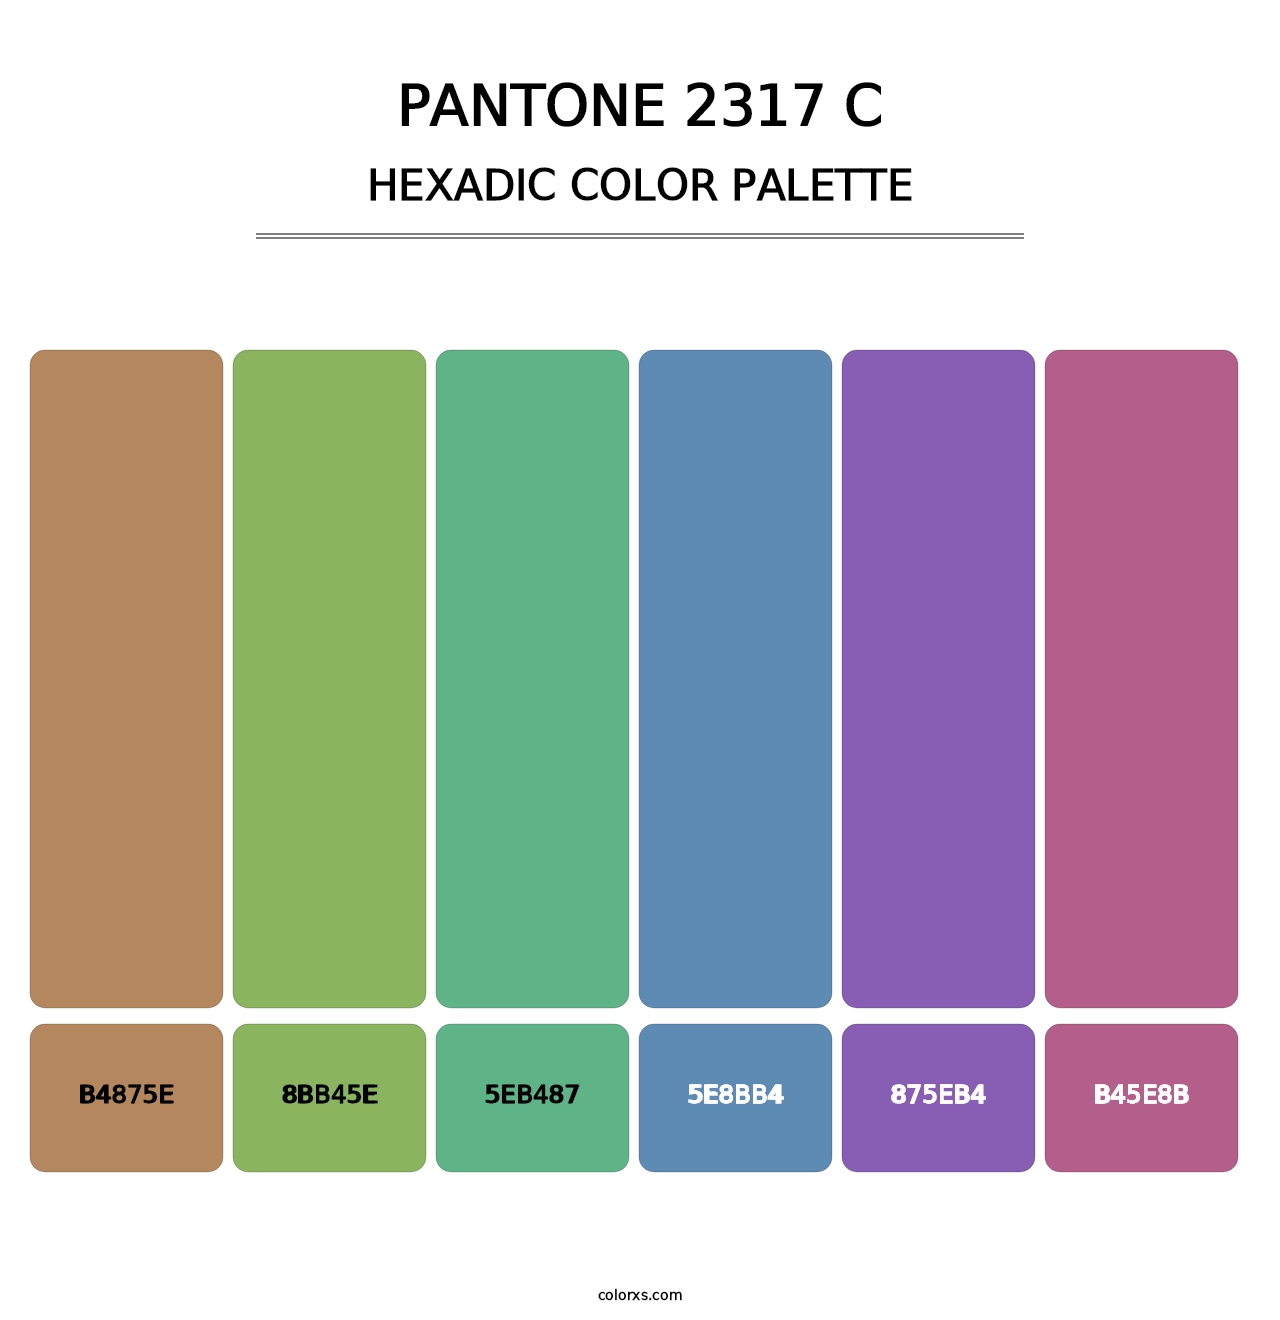 PANTONE 2317 C - Hexadic Color Palette